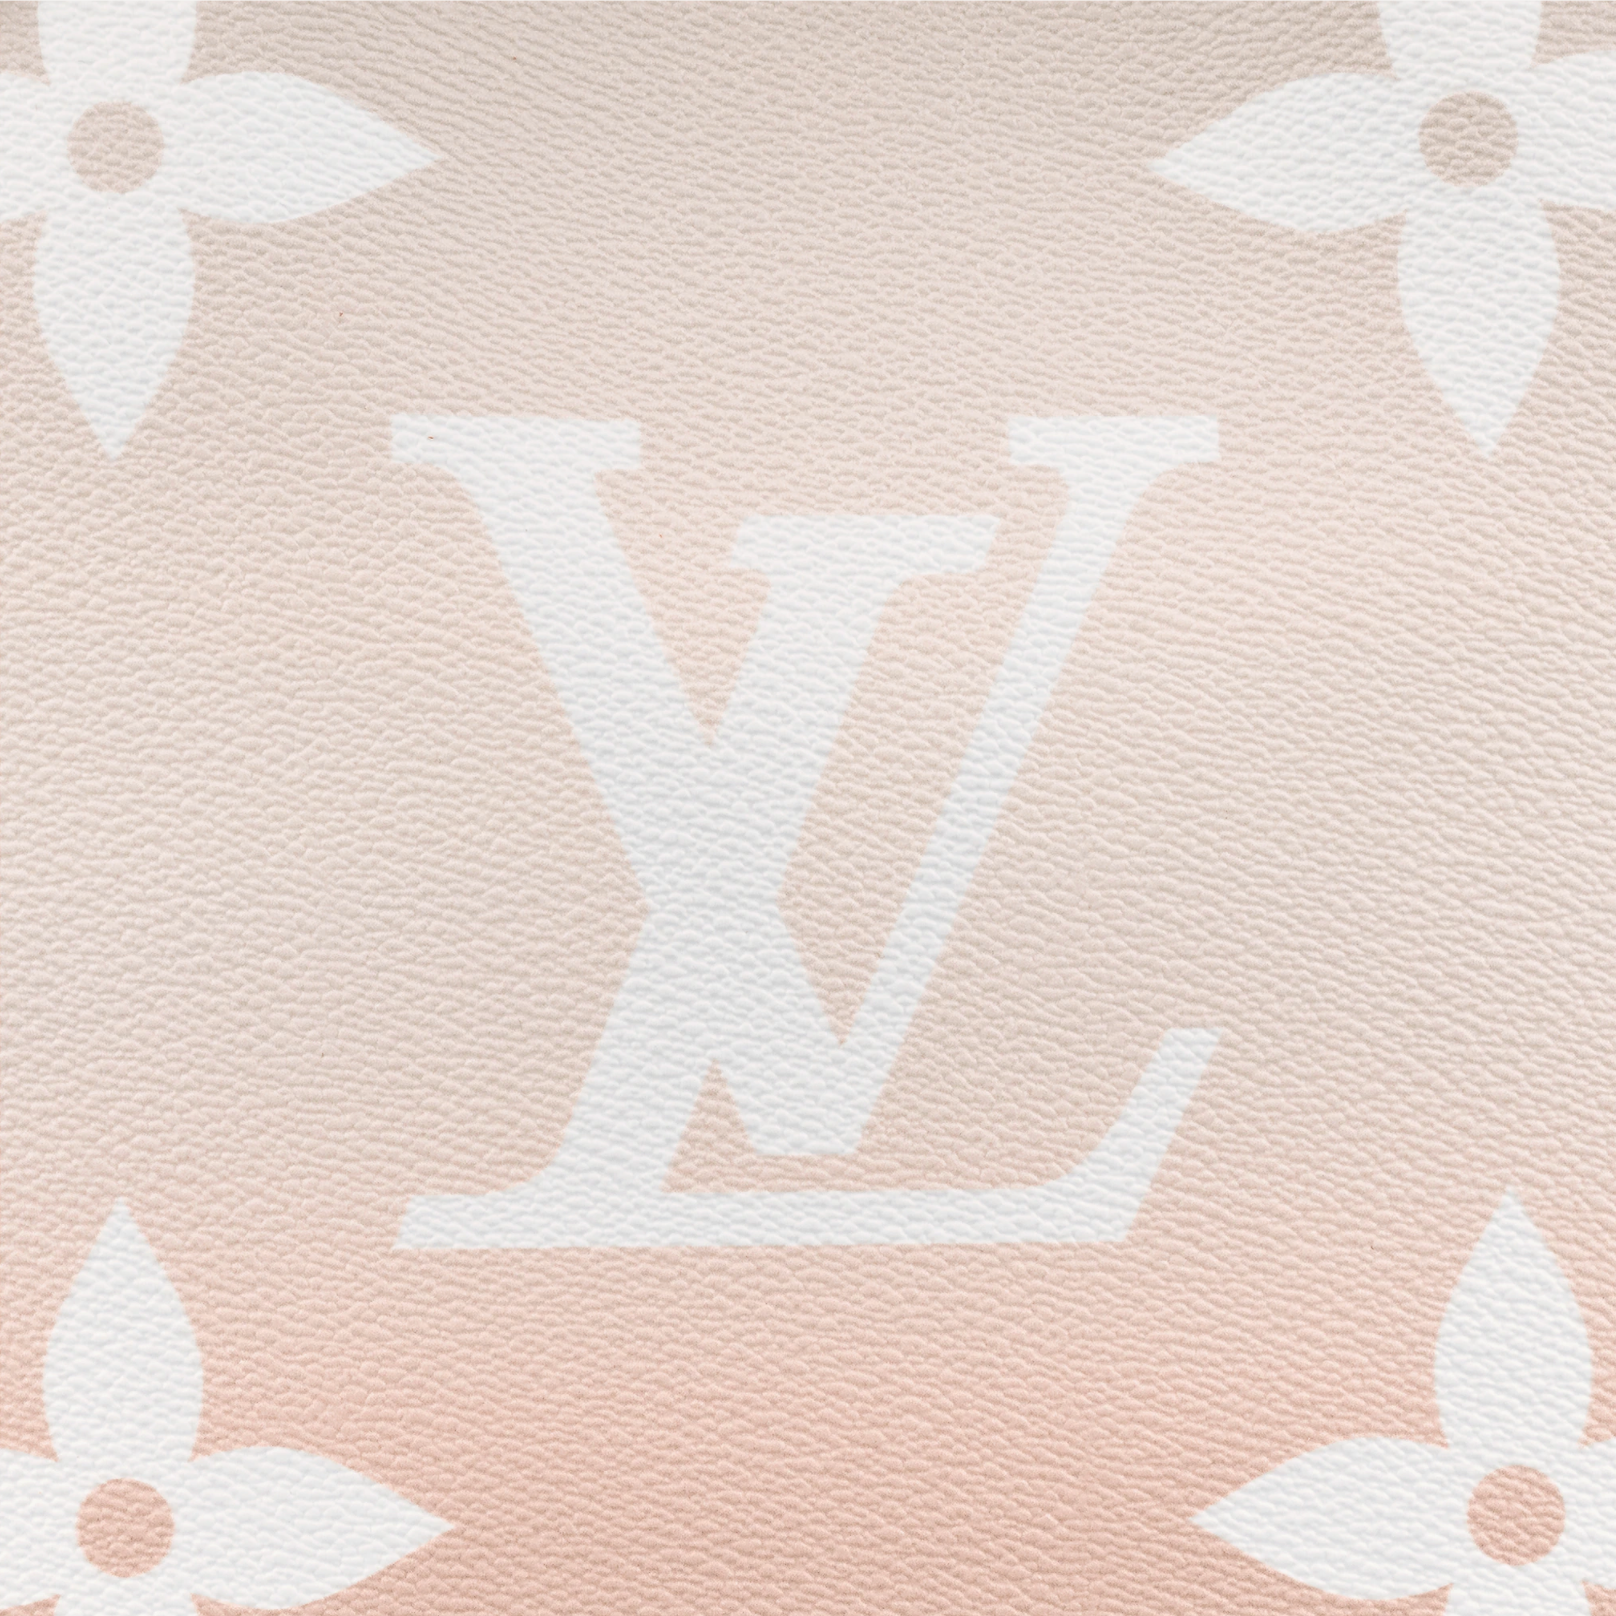 Louis - Louis Vuitton Gold Stickers Png,Louis Vuitton Logo Png